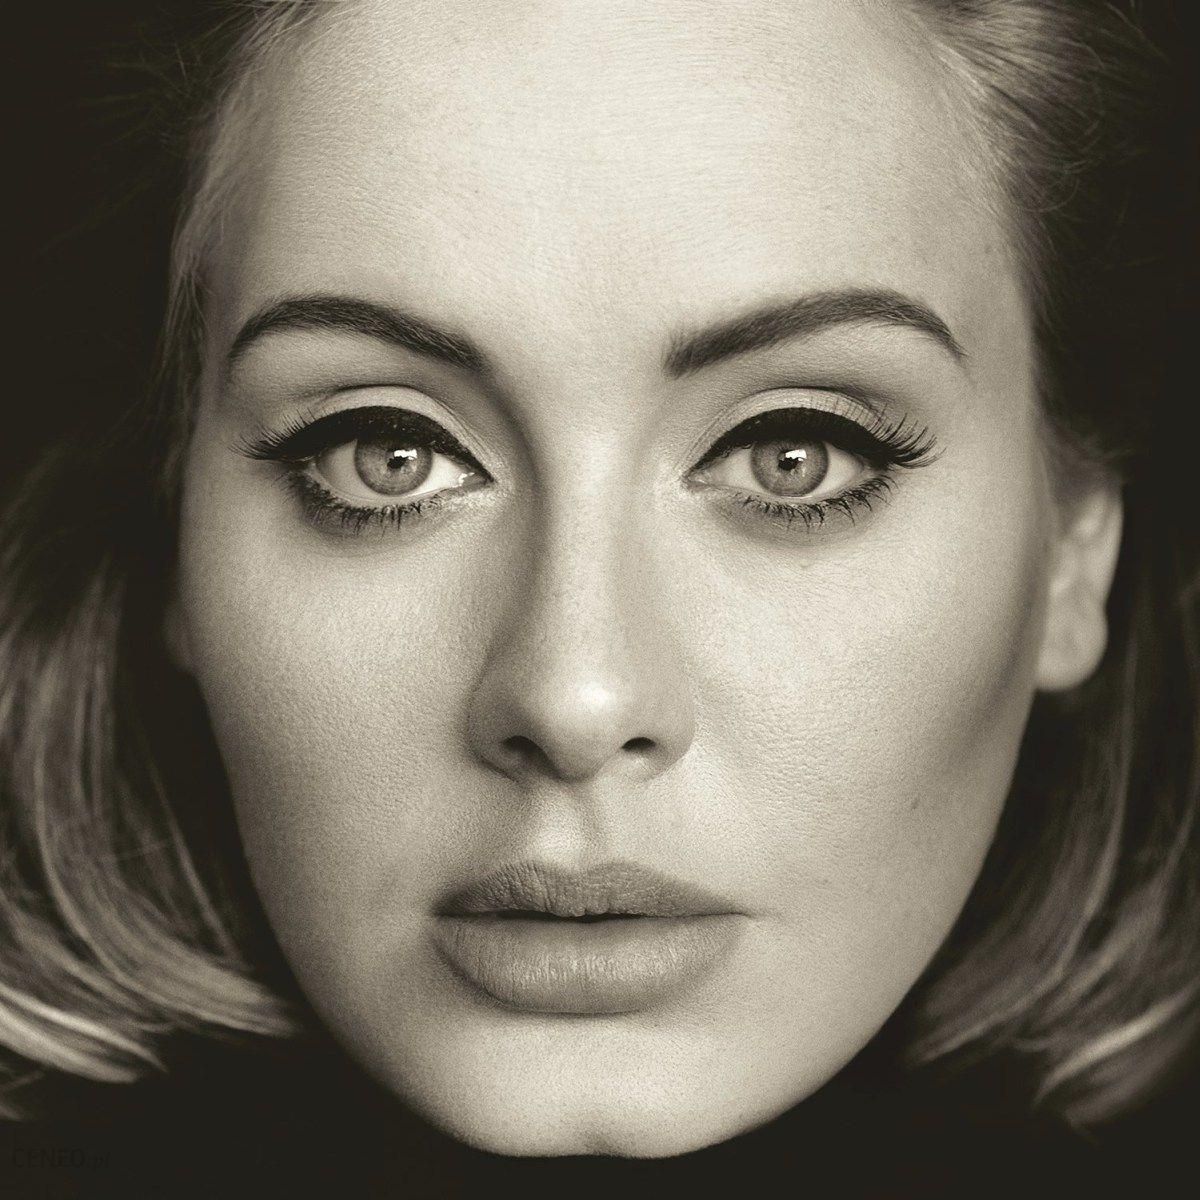 Płyta Adele